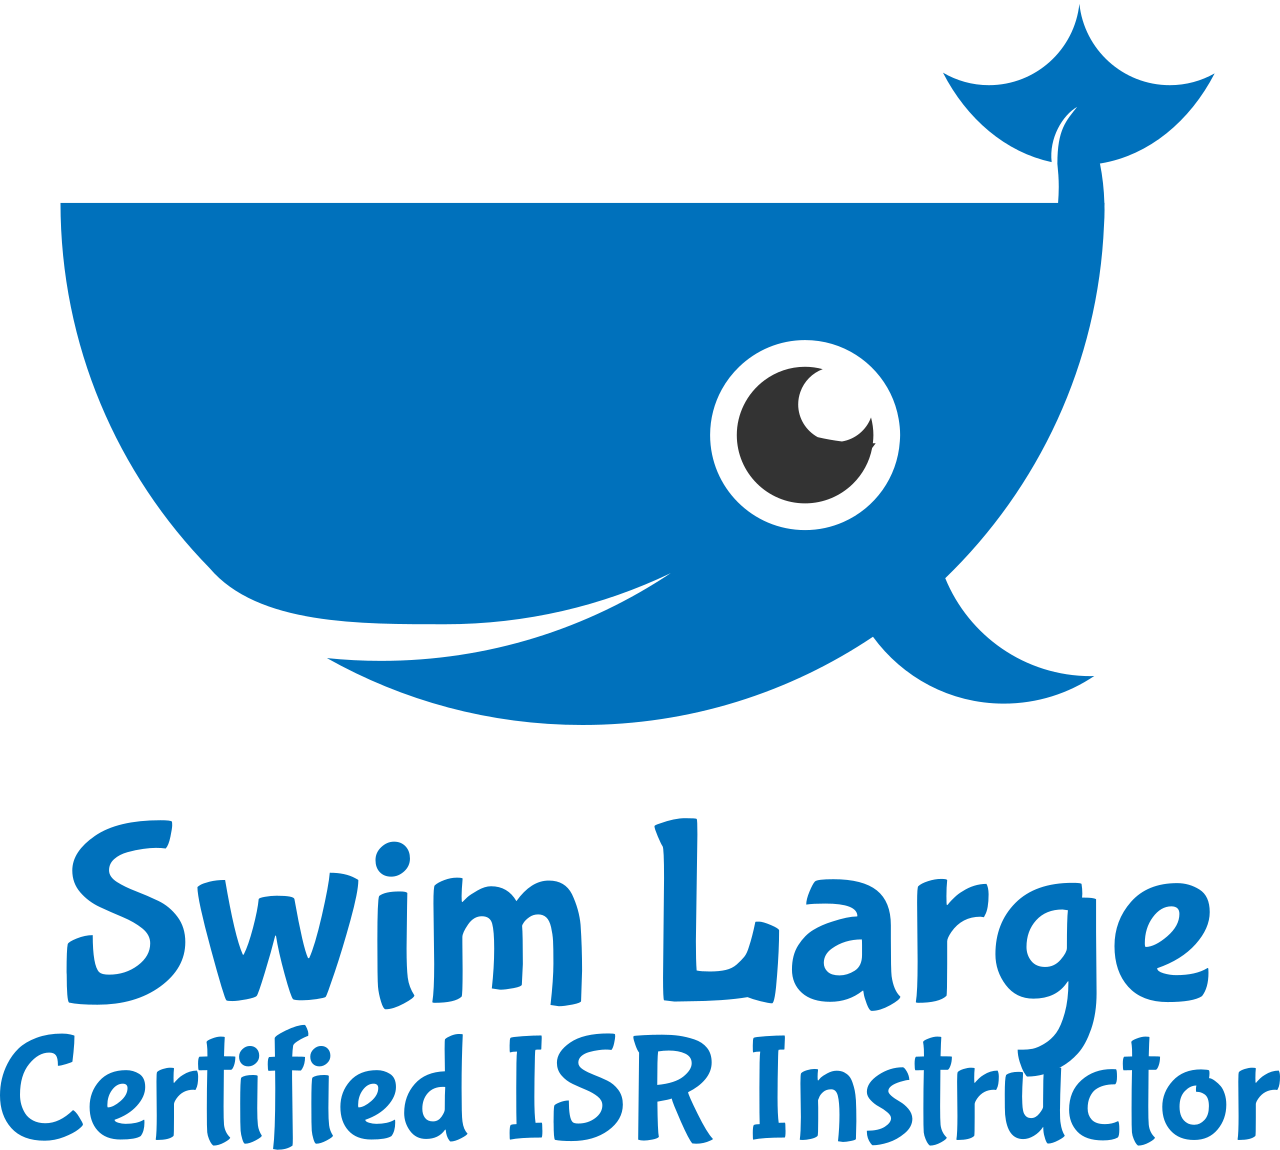 Swim Large's web page